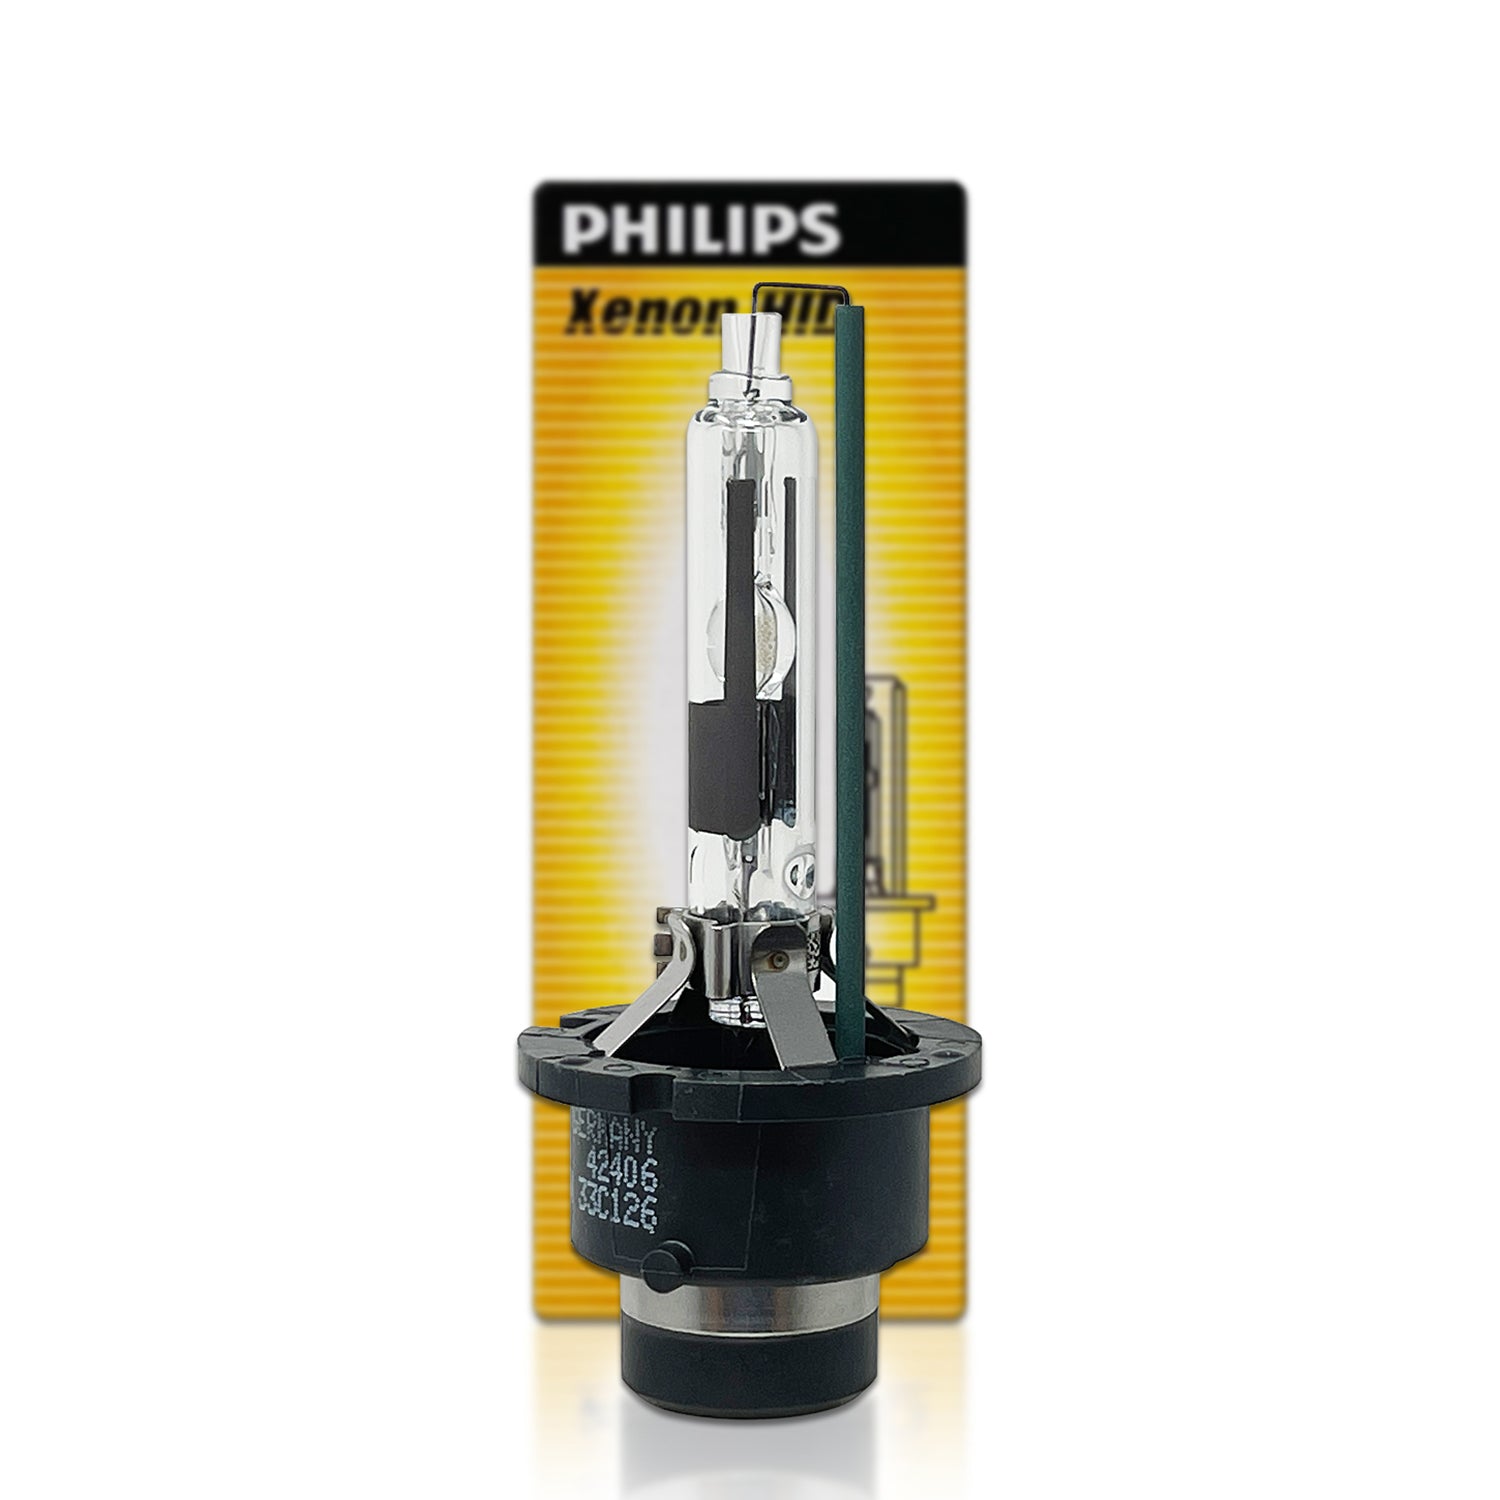 Philips D4r Xenon 42406 4300K OEM HID Bulb